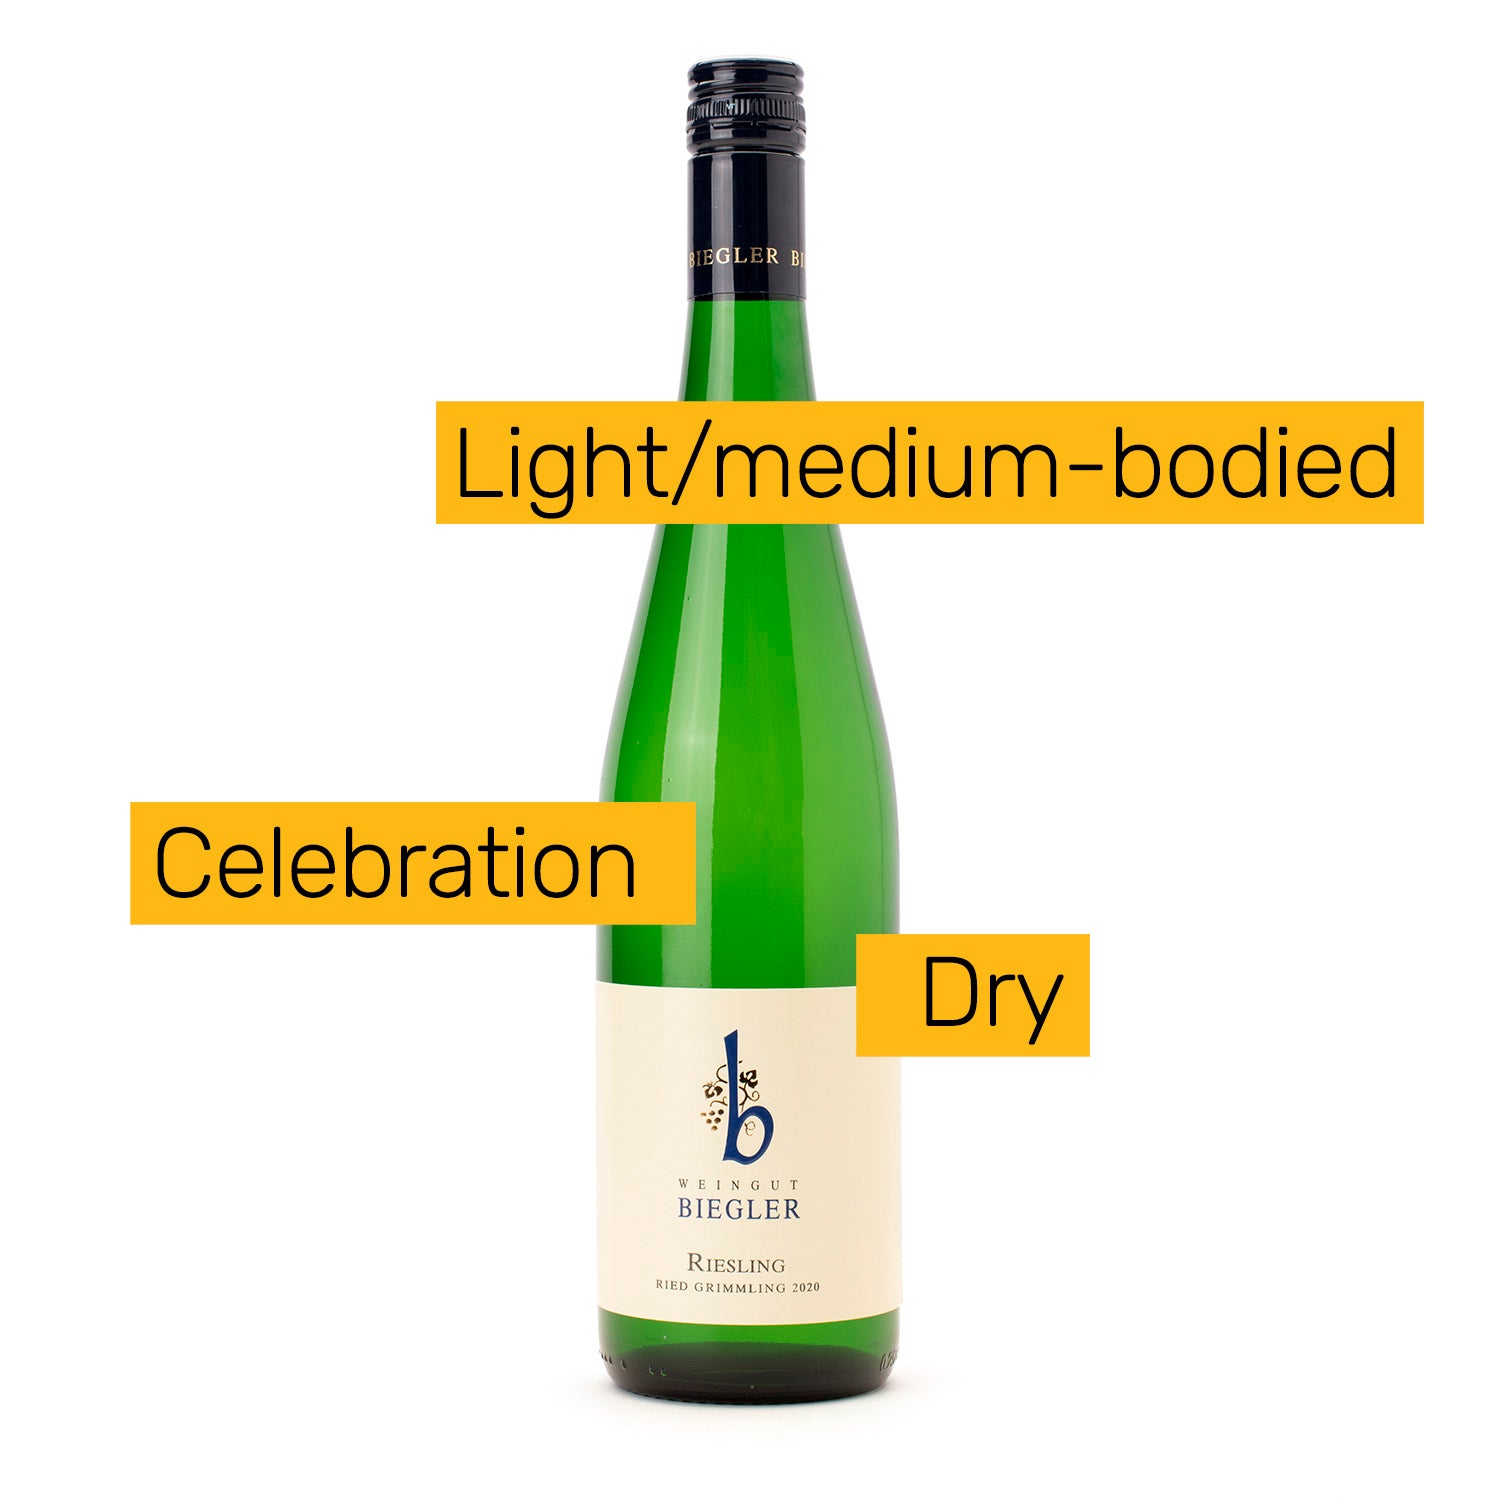 light/medium bodied dry white wine